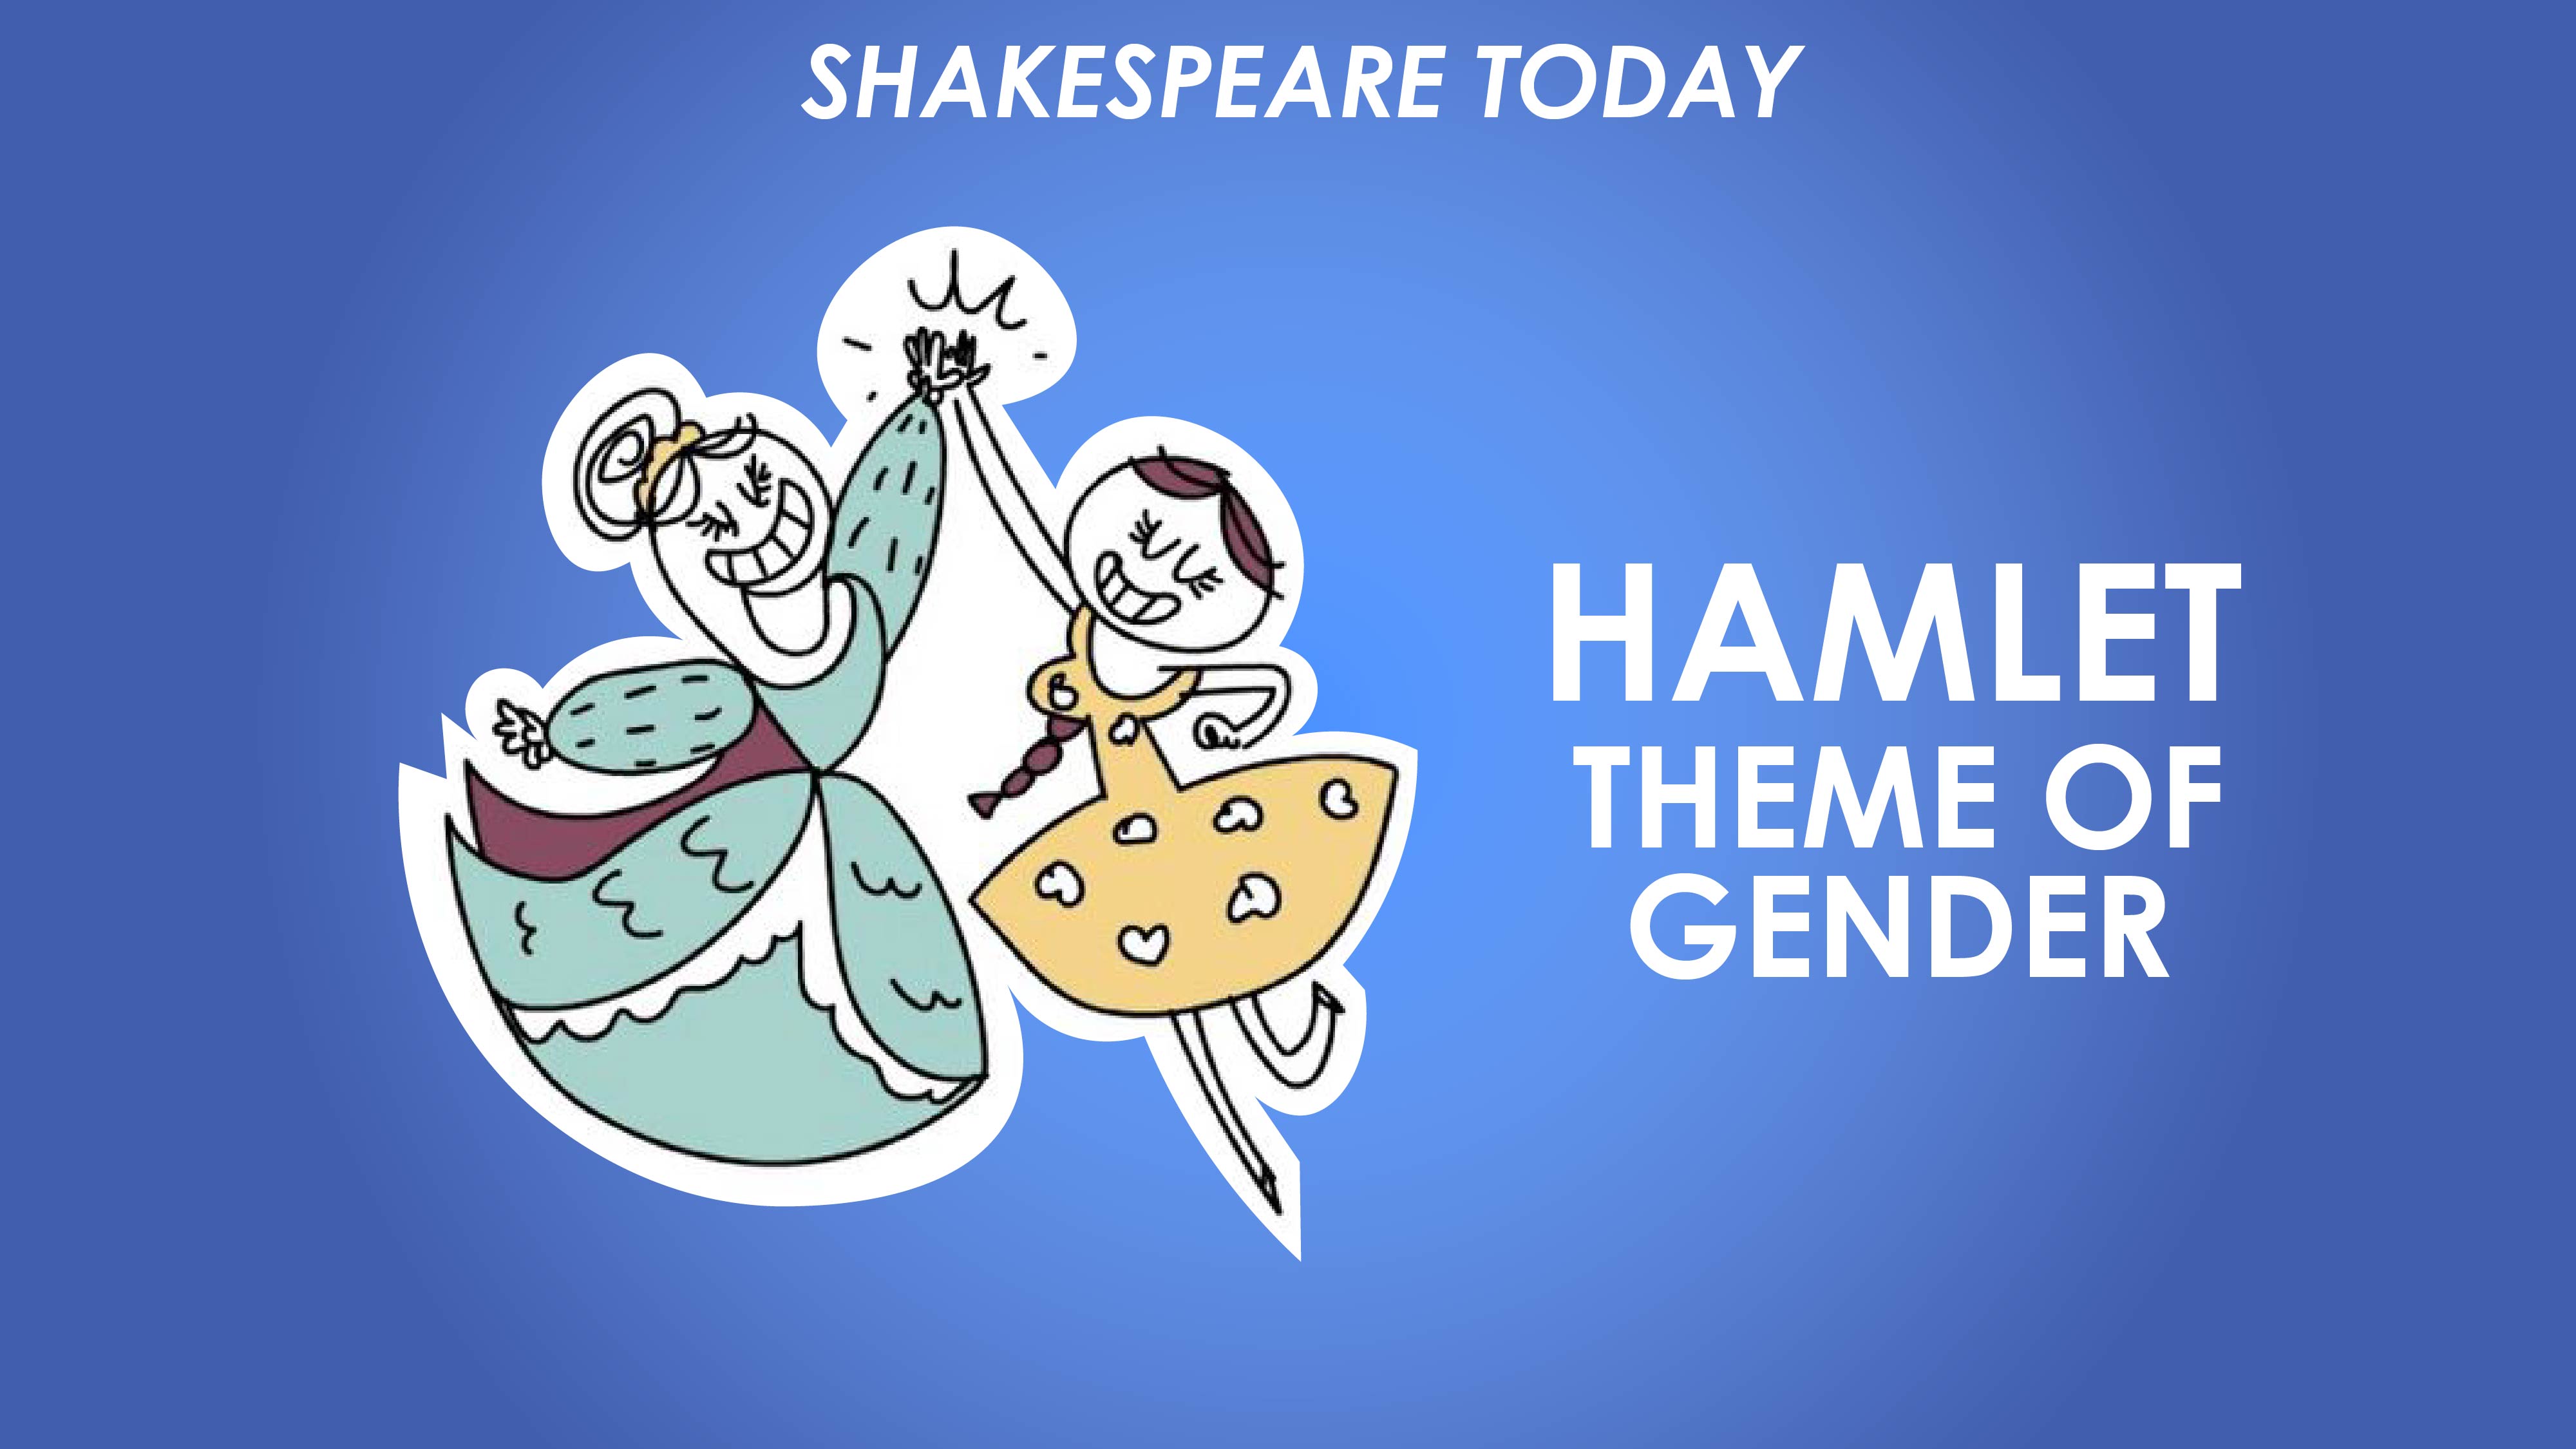 Hamlet Theme of Gender - Shakespeare Today Series